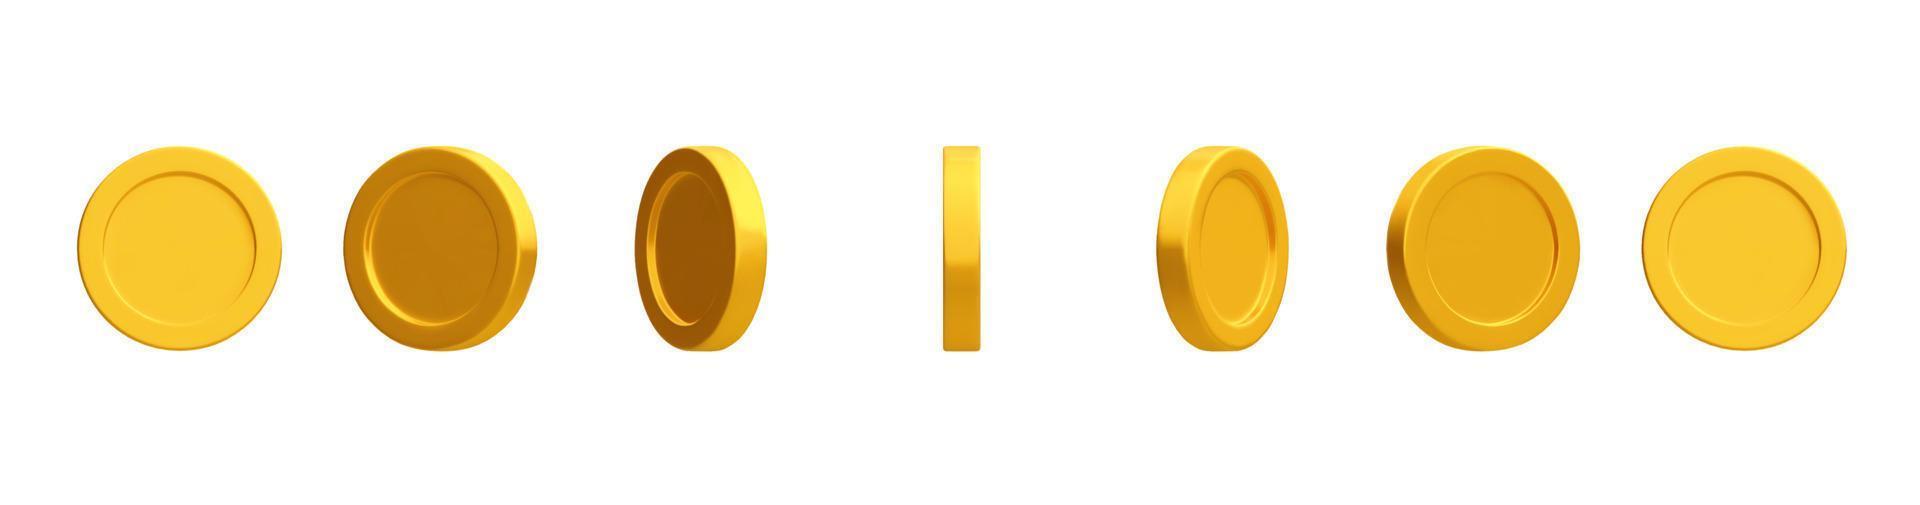 monedas de oro 3d giratorias, juego de dinero dorado. ilustración vectorial vector